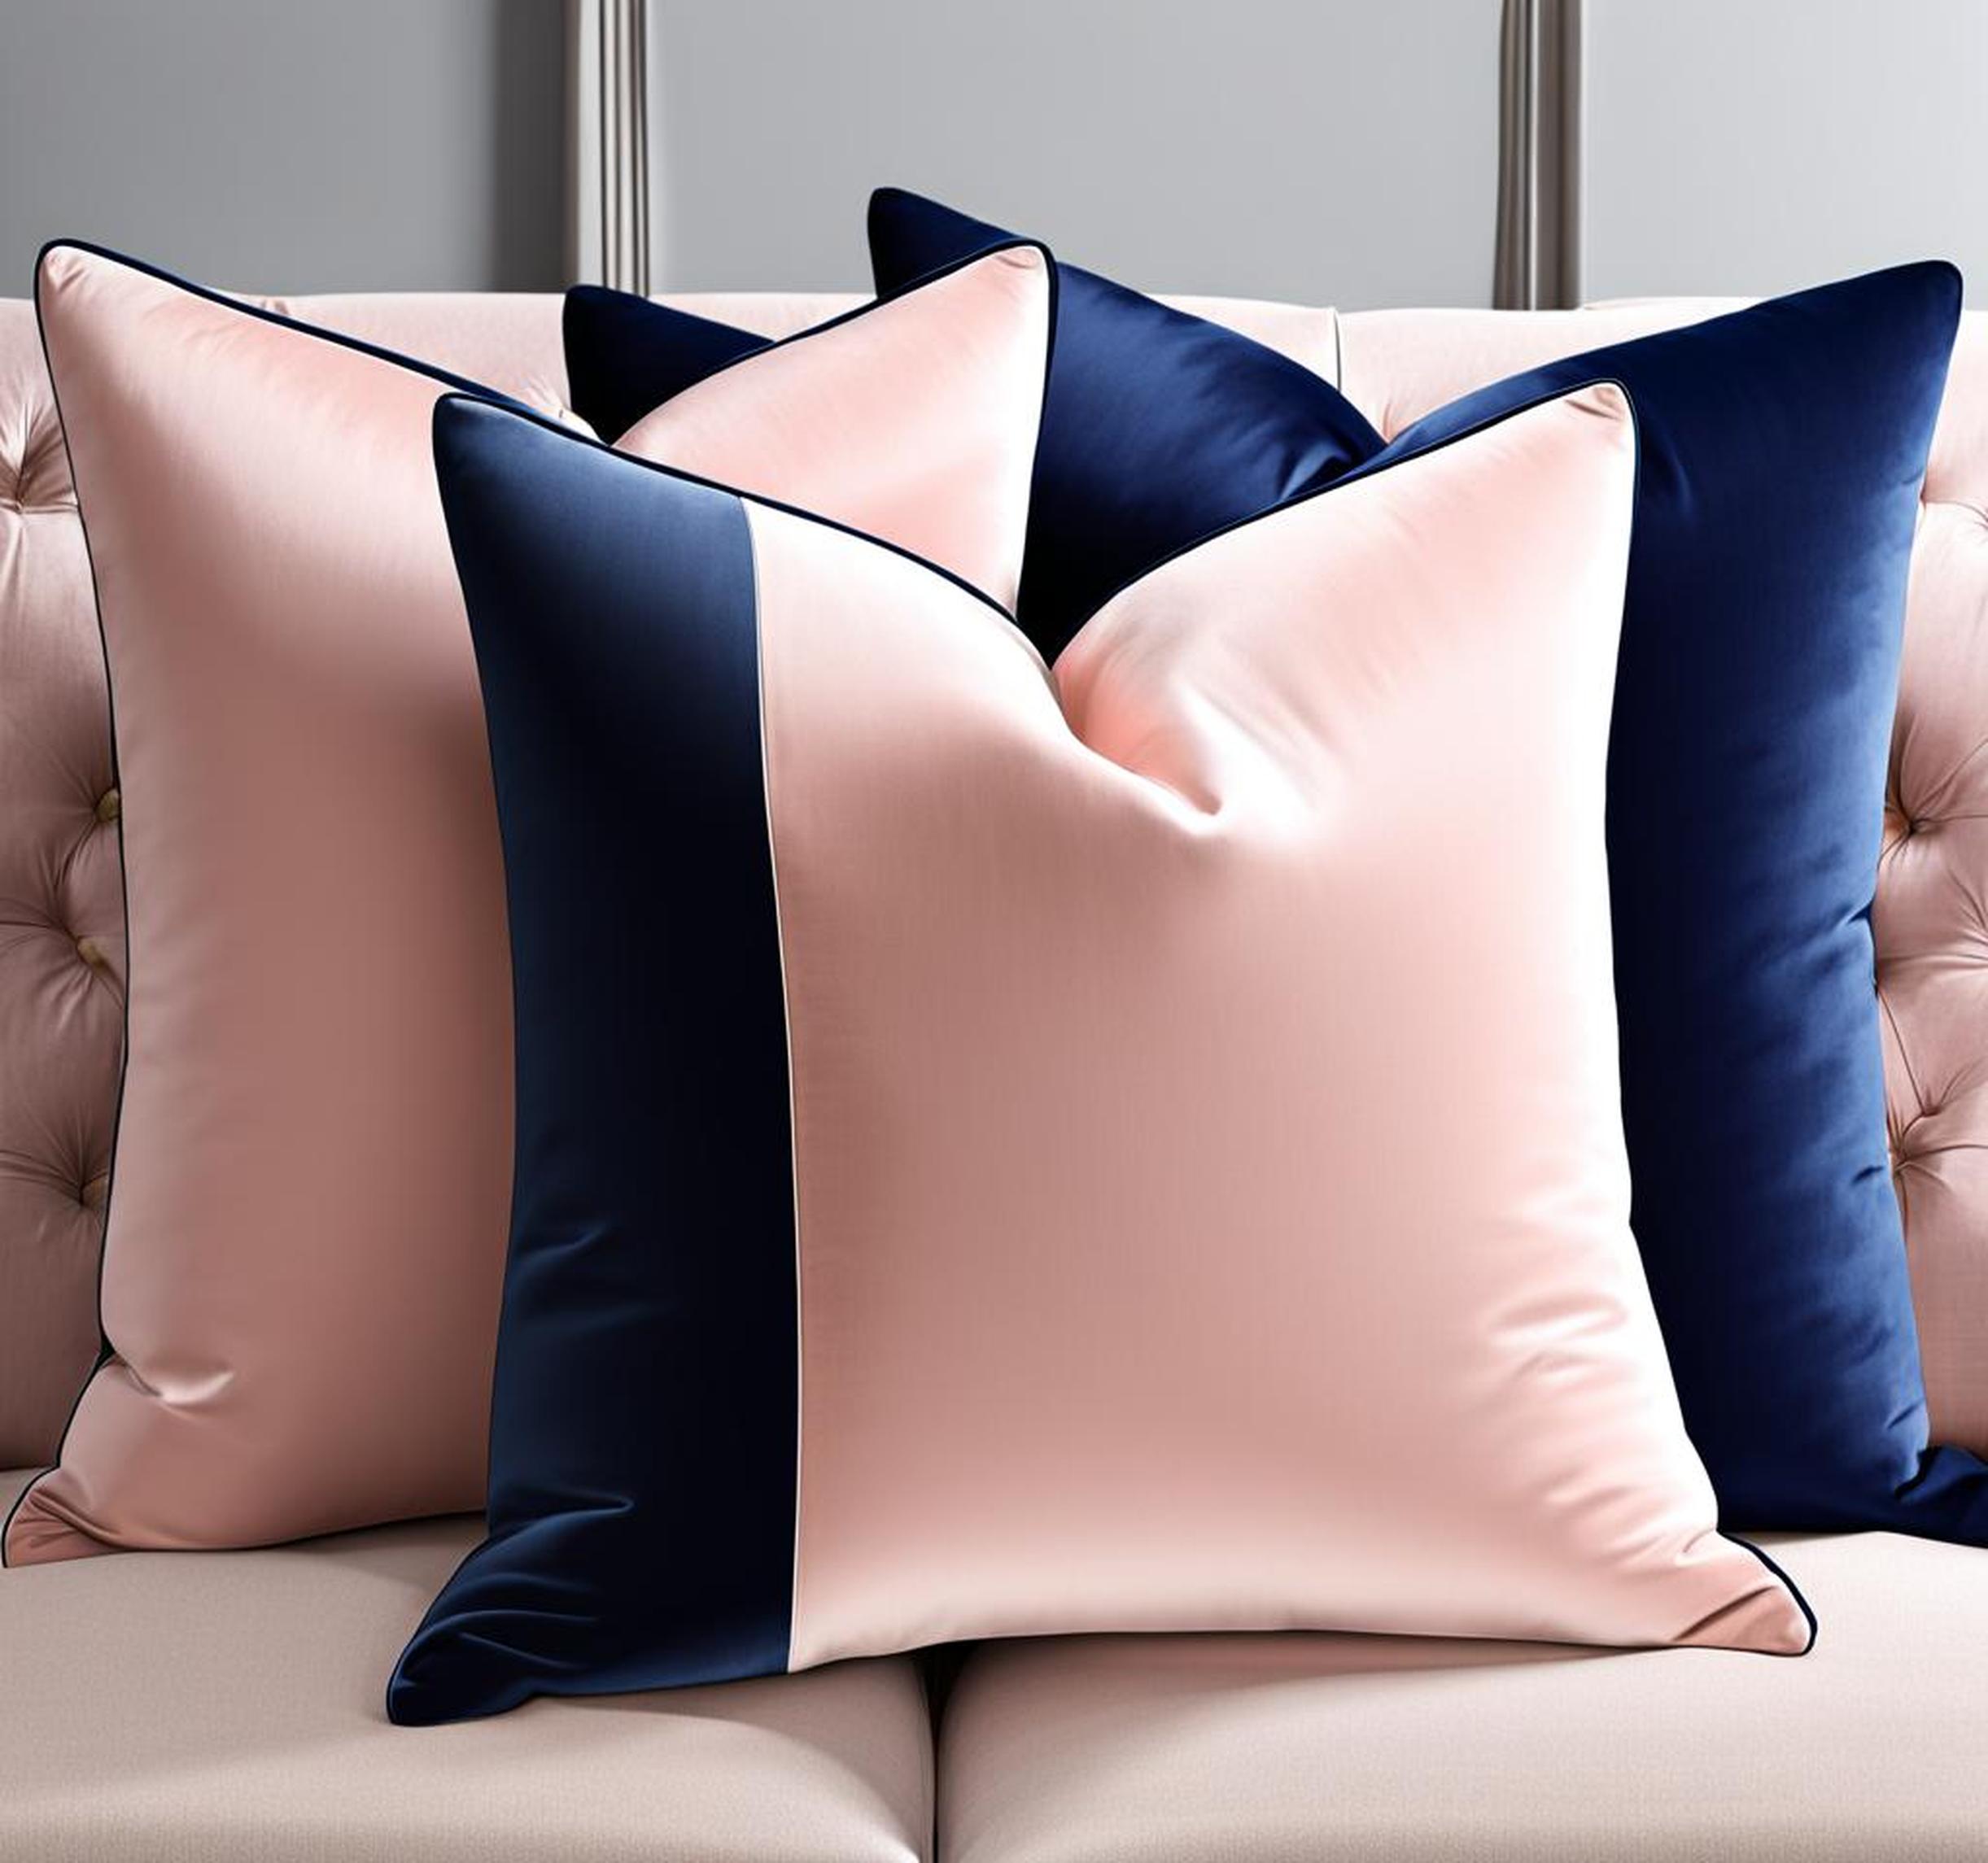 blush and navy pillows